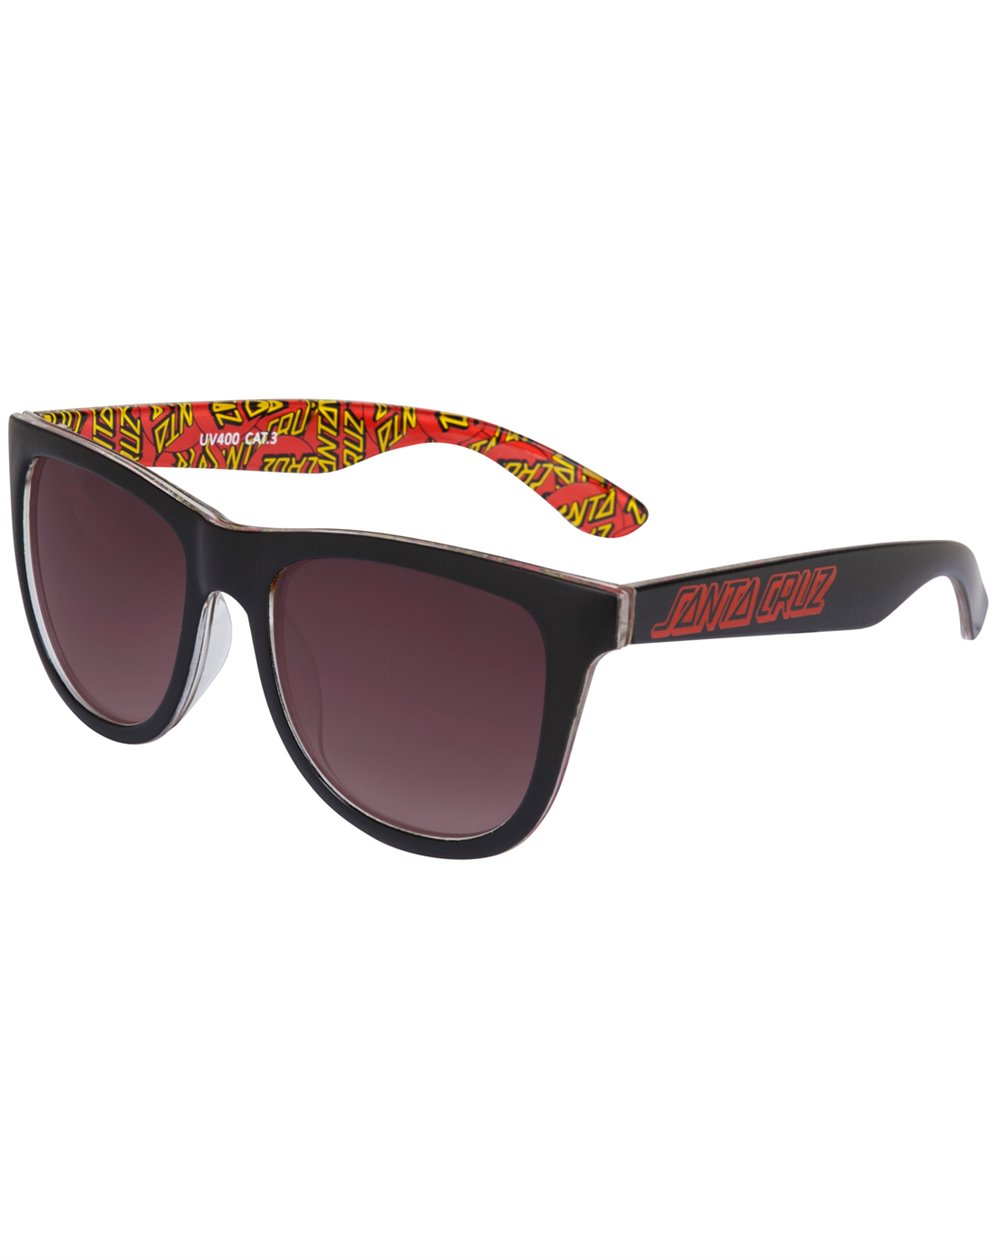 Santa Cruz Men's Sunglasses Multi Classic Dot Black